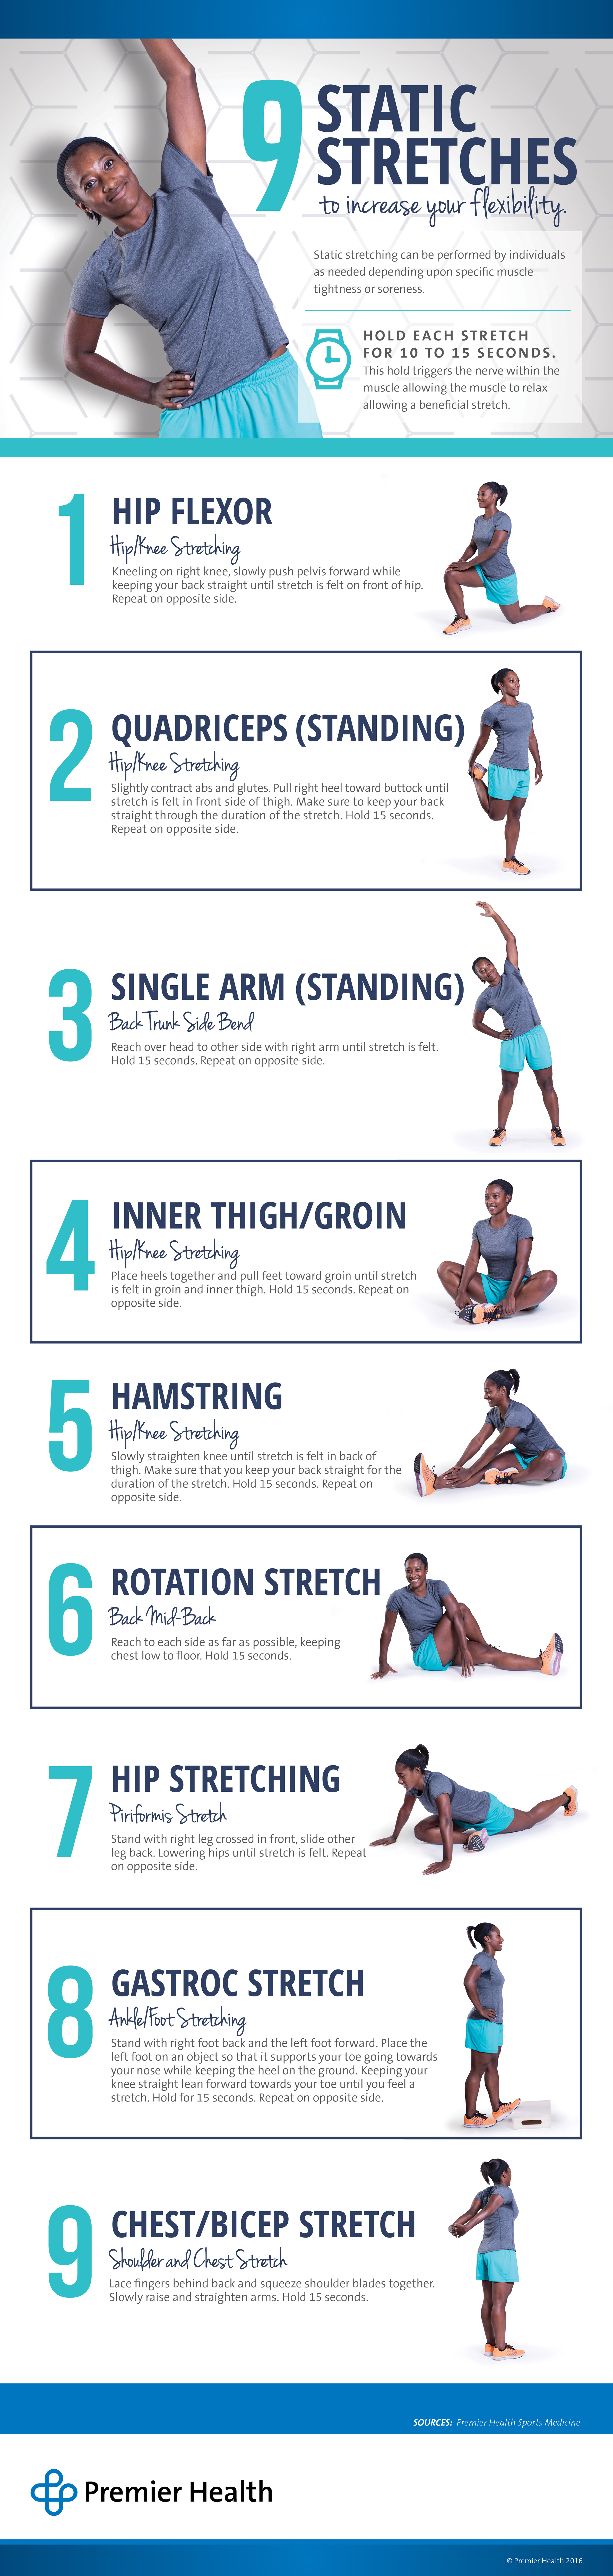 5 Exercises to Improve your Flexibility